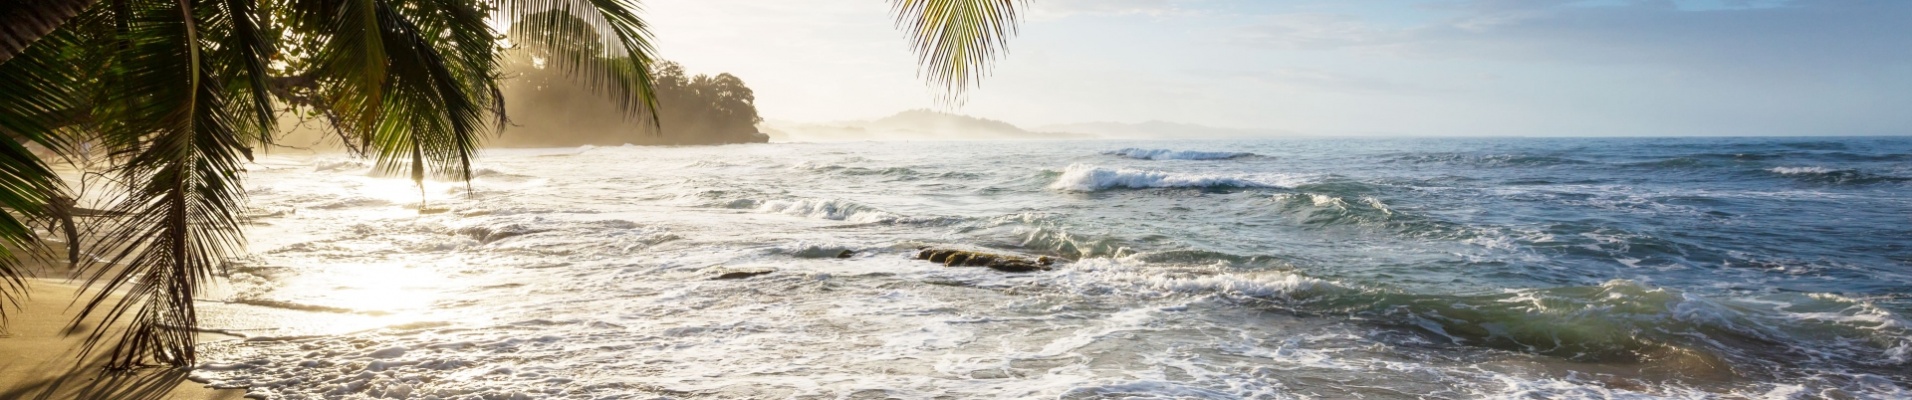 plage-costarica